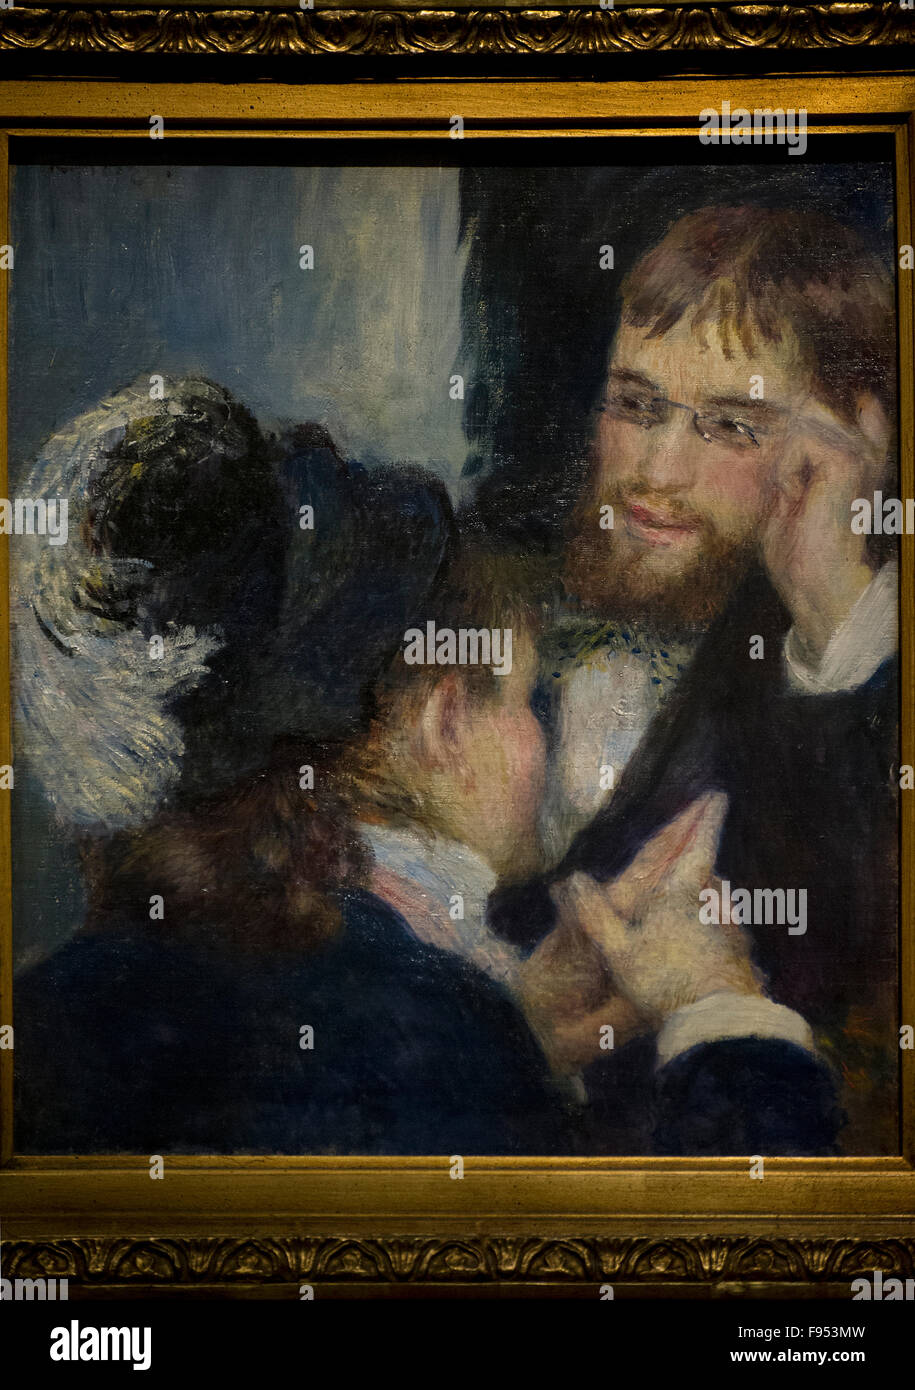 Pierre-Auguste Renoir (1841-1919). French painter. Conversation, 1870s. National Museum. Stockholm. Sweden. Stock Photo